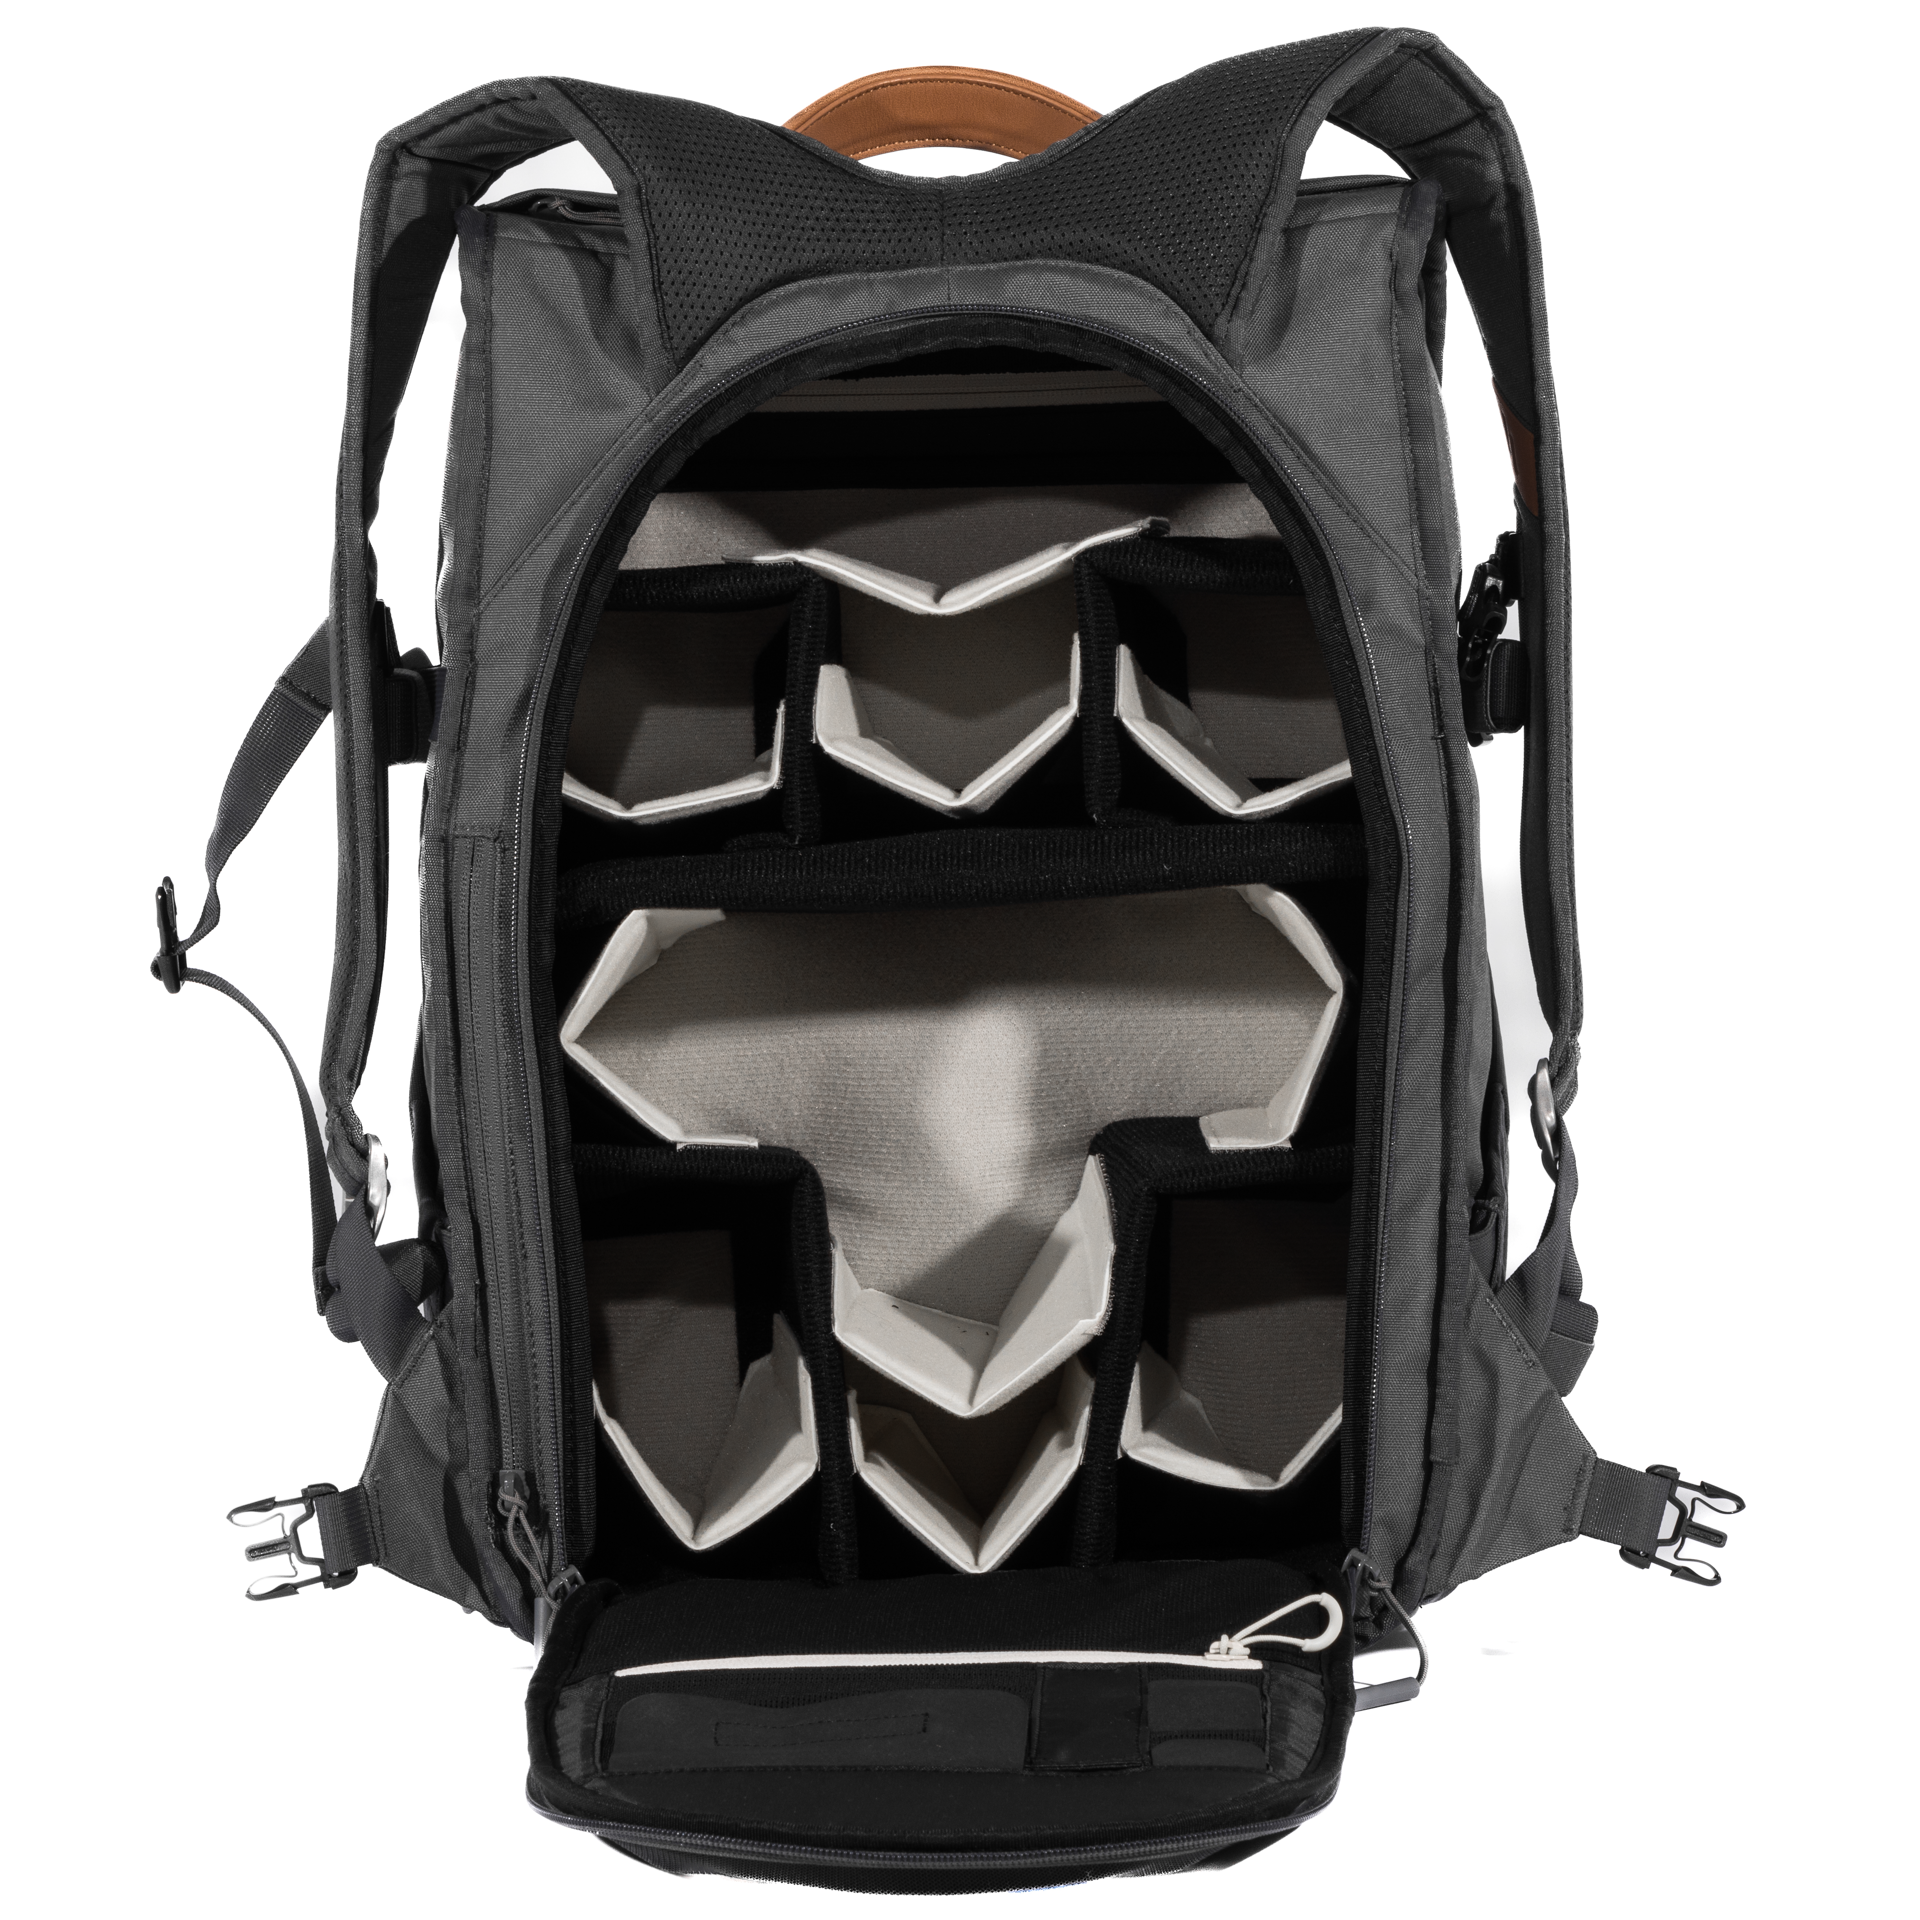 The Original Backpack